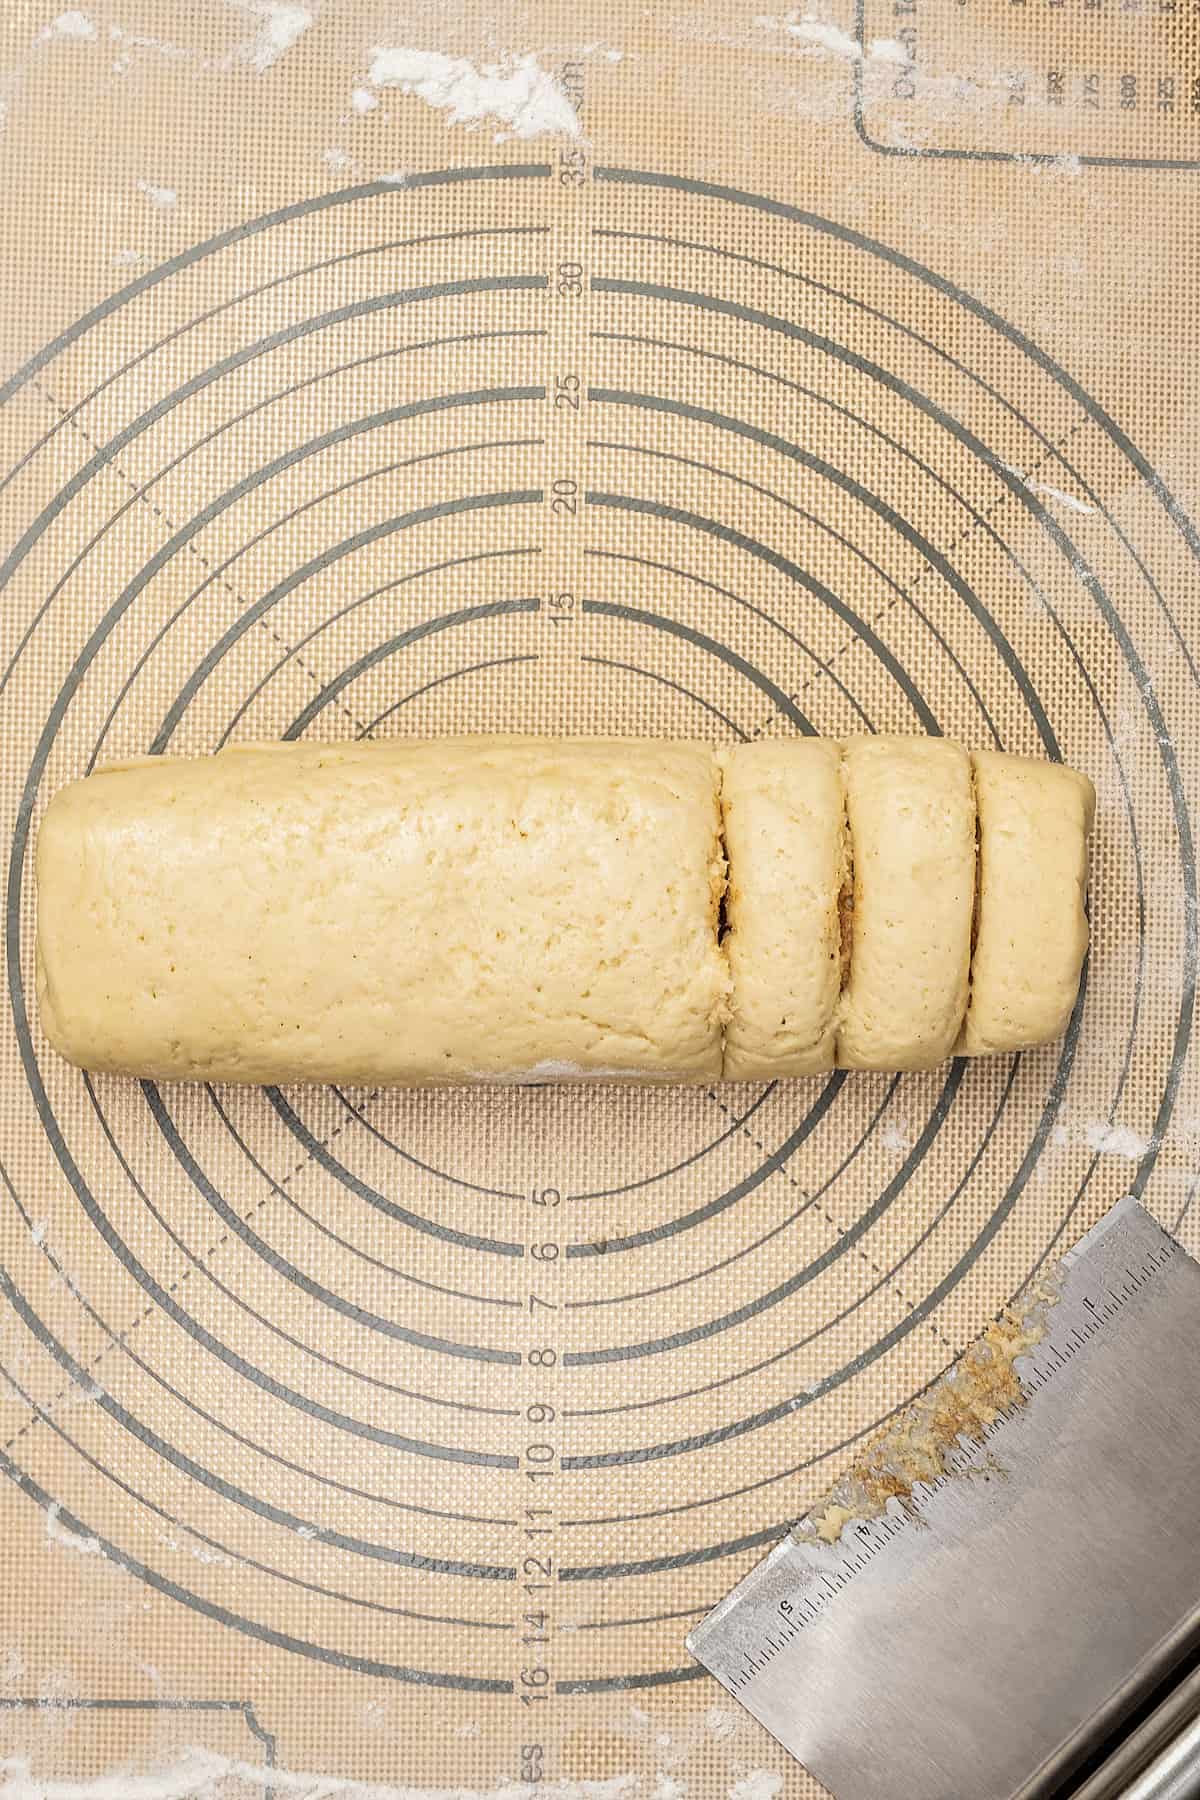 A rolled honey bun log cut into slices.